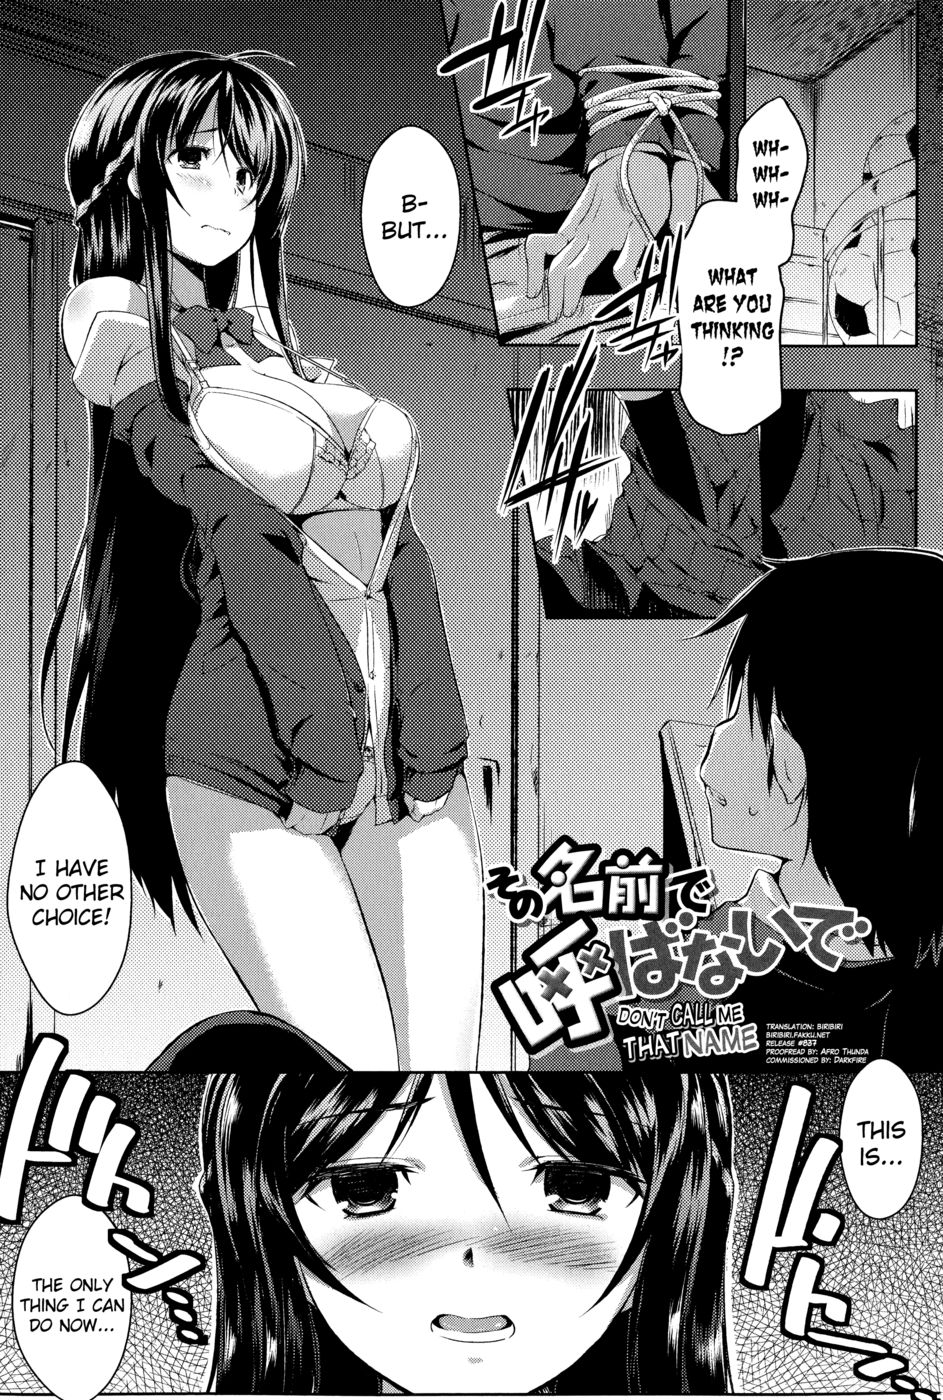 Hentai Manga Comic-Tayun Purun Monyun-Chapter 1-Don't call me that name-1